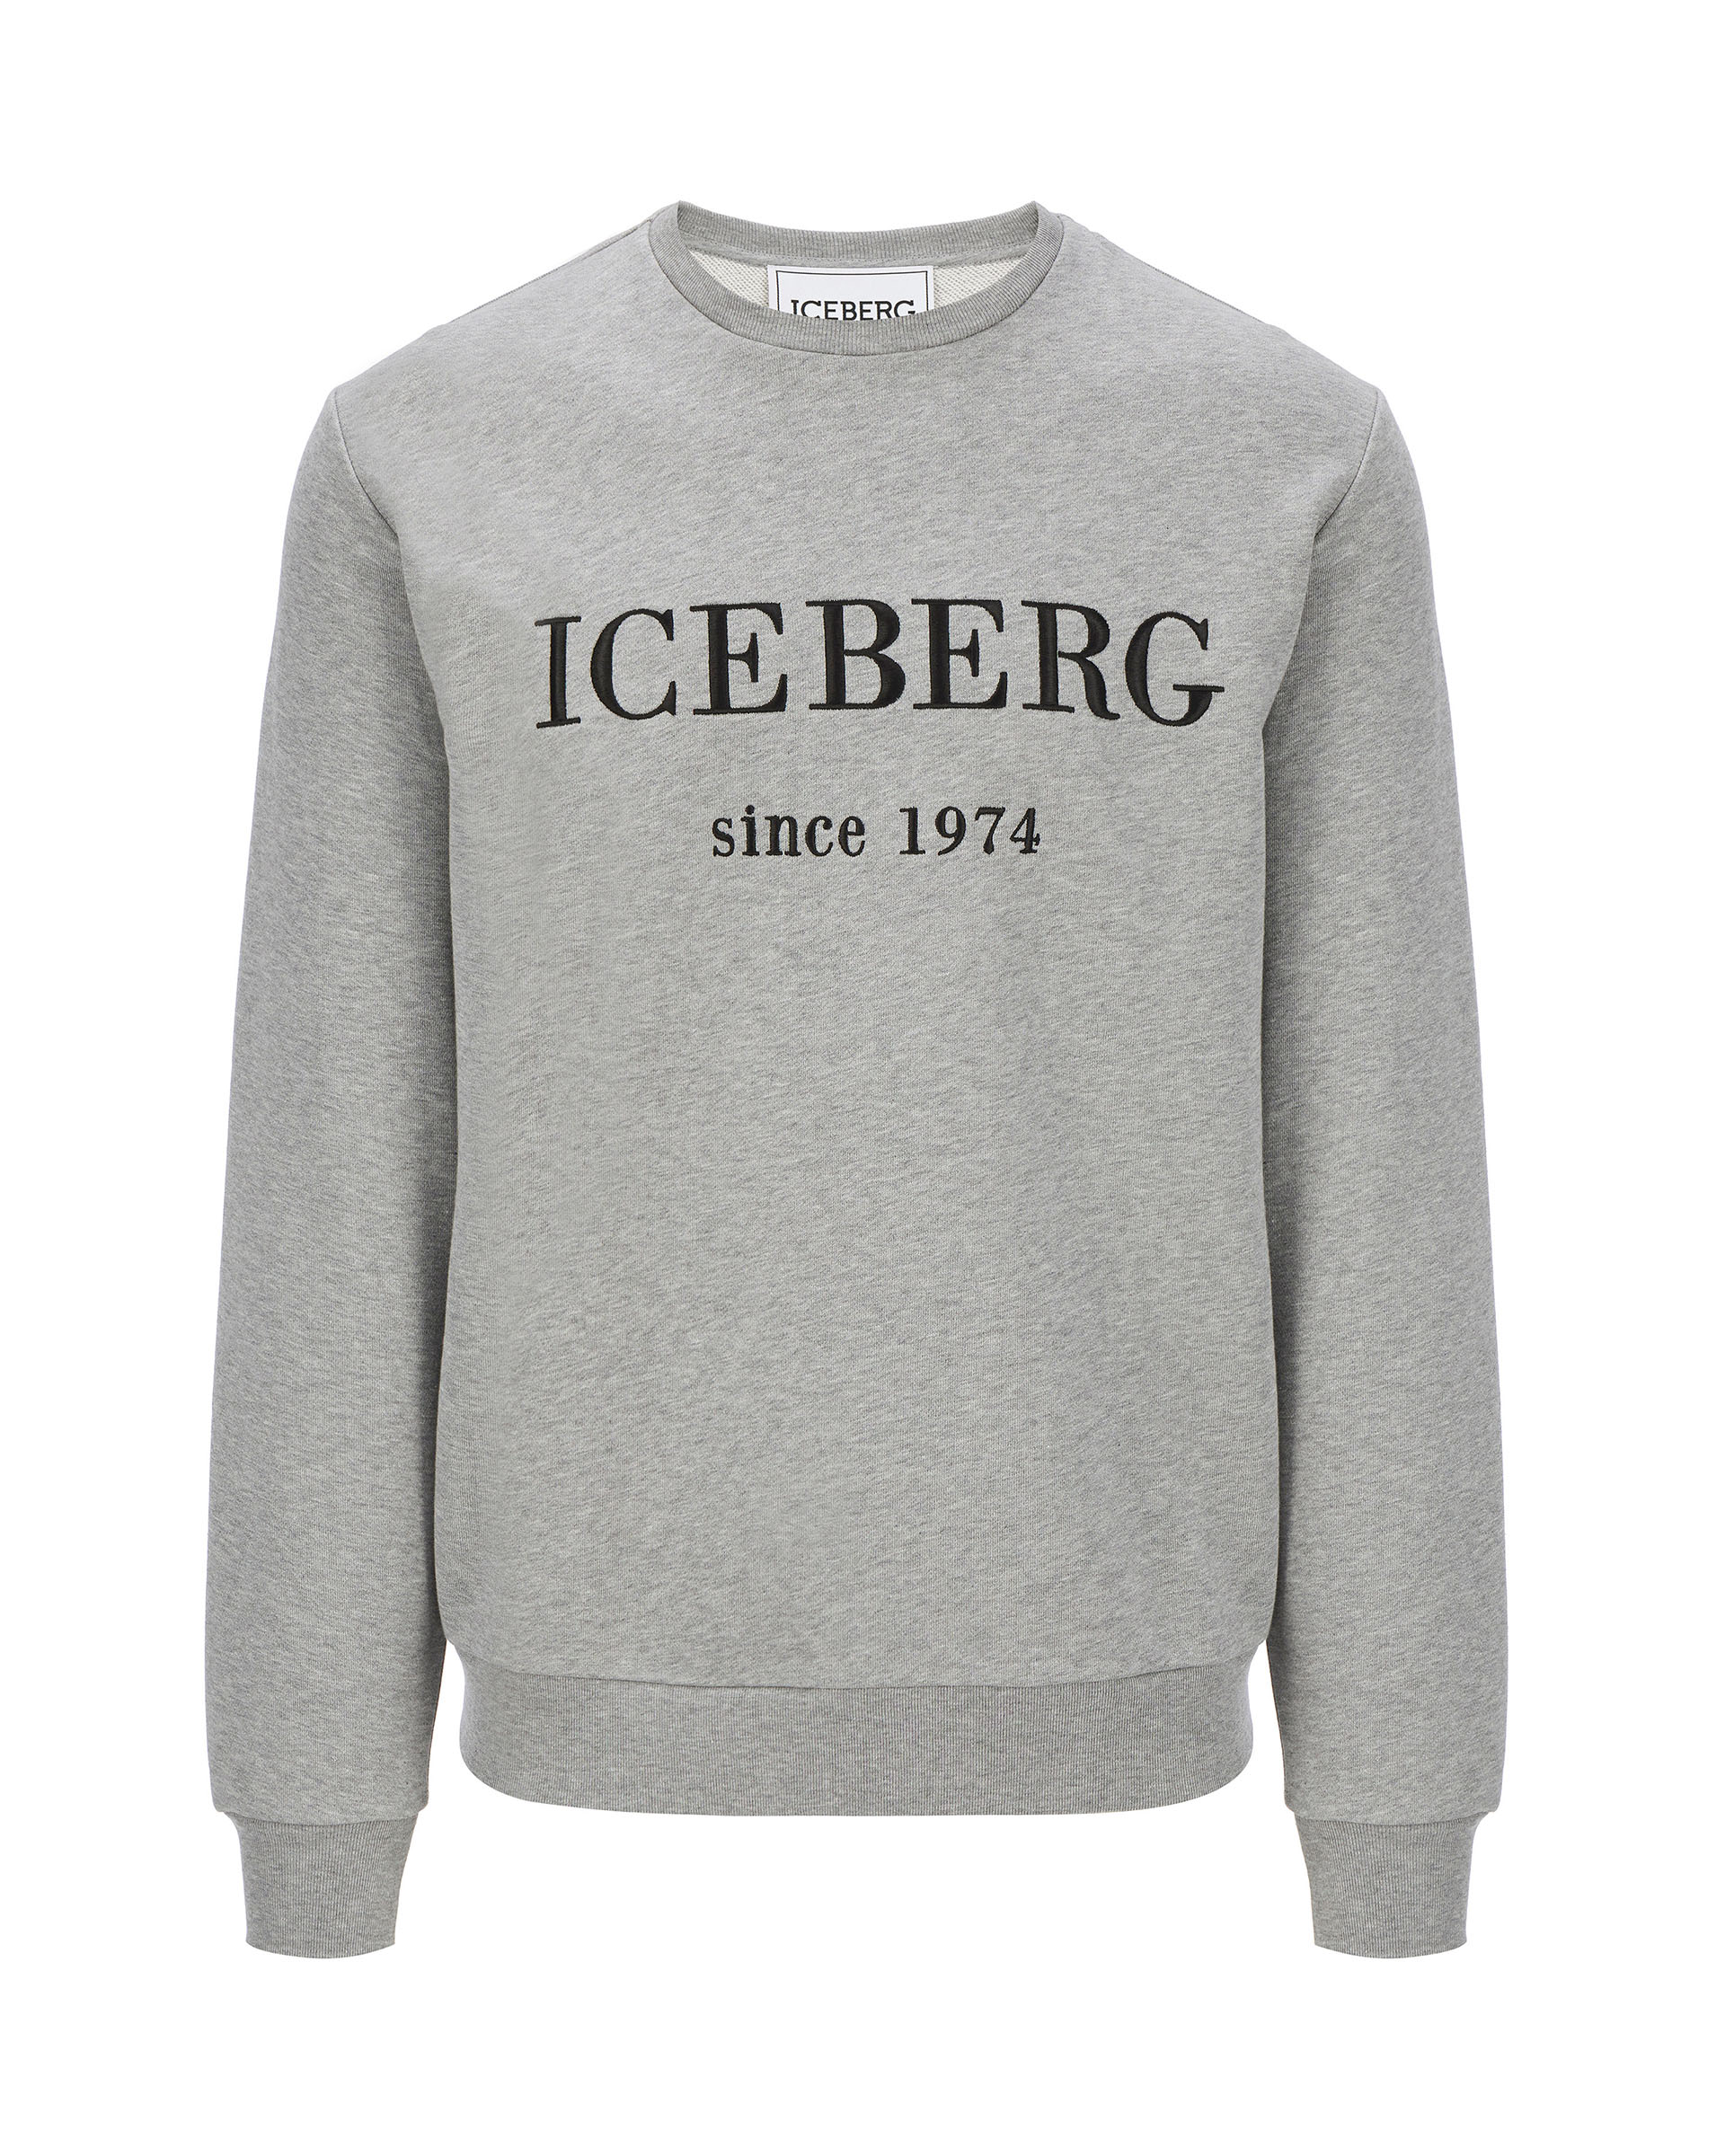 iceberg sweater